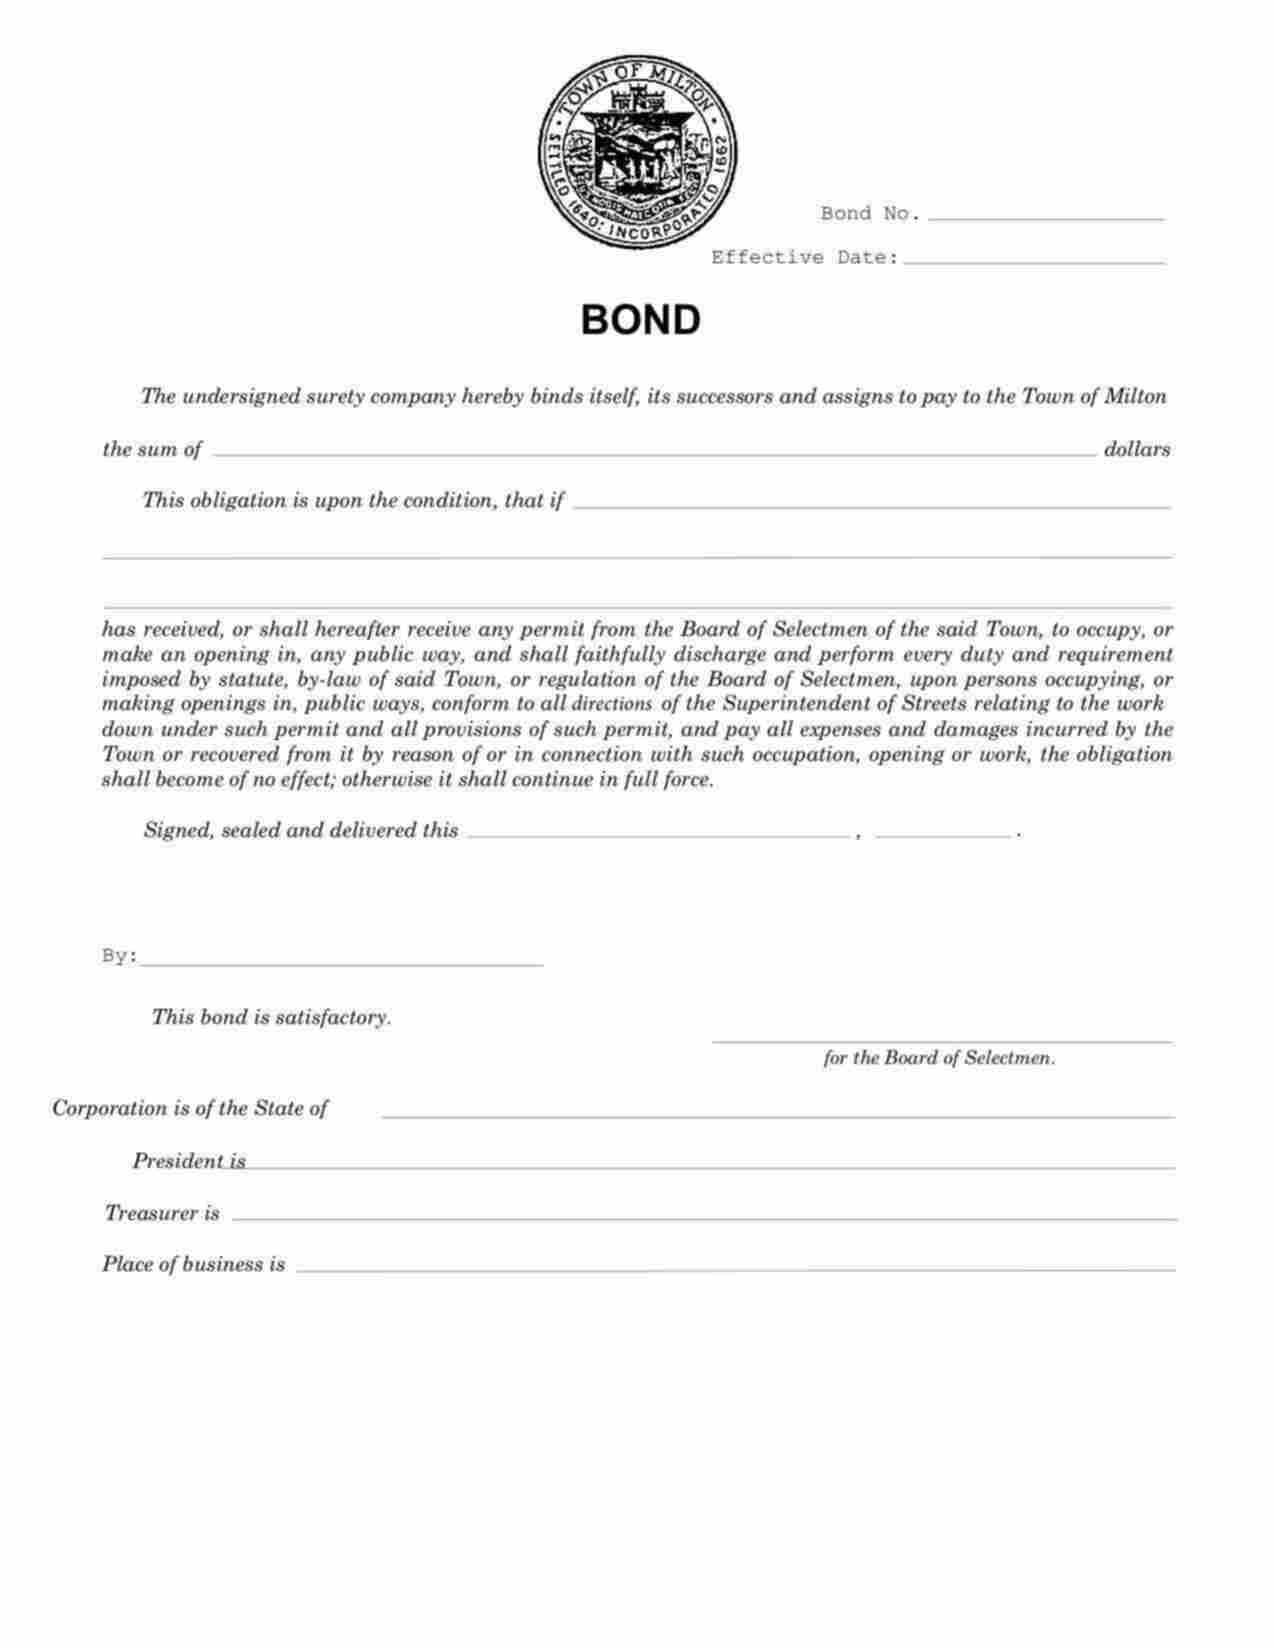 Massachusetts Street Opening Permit Bond Form